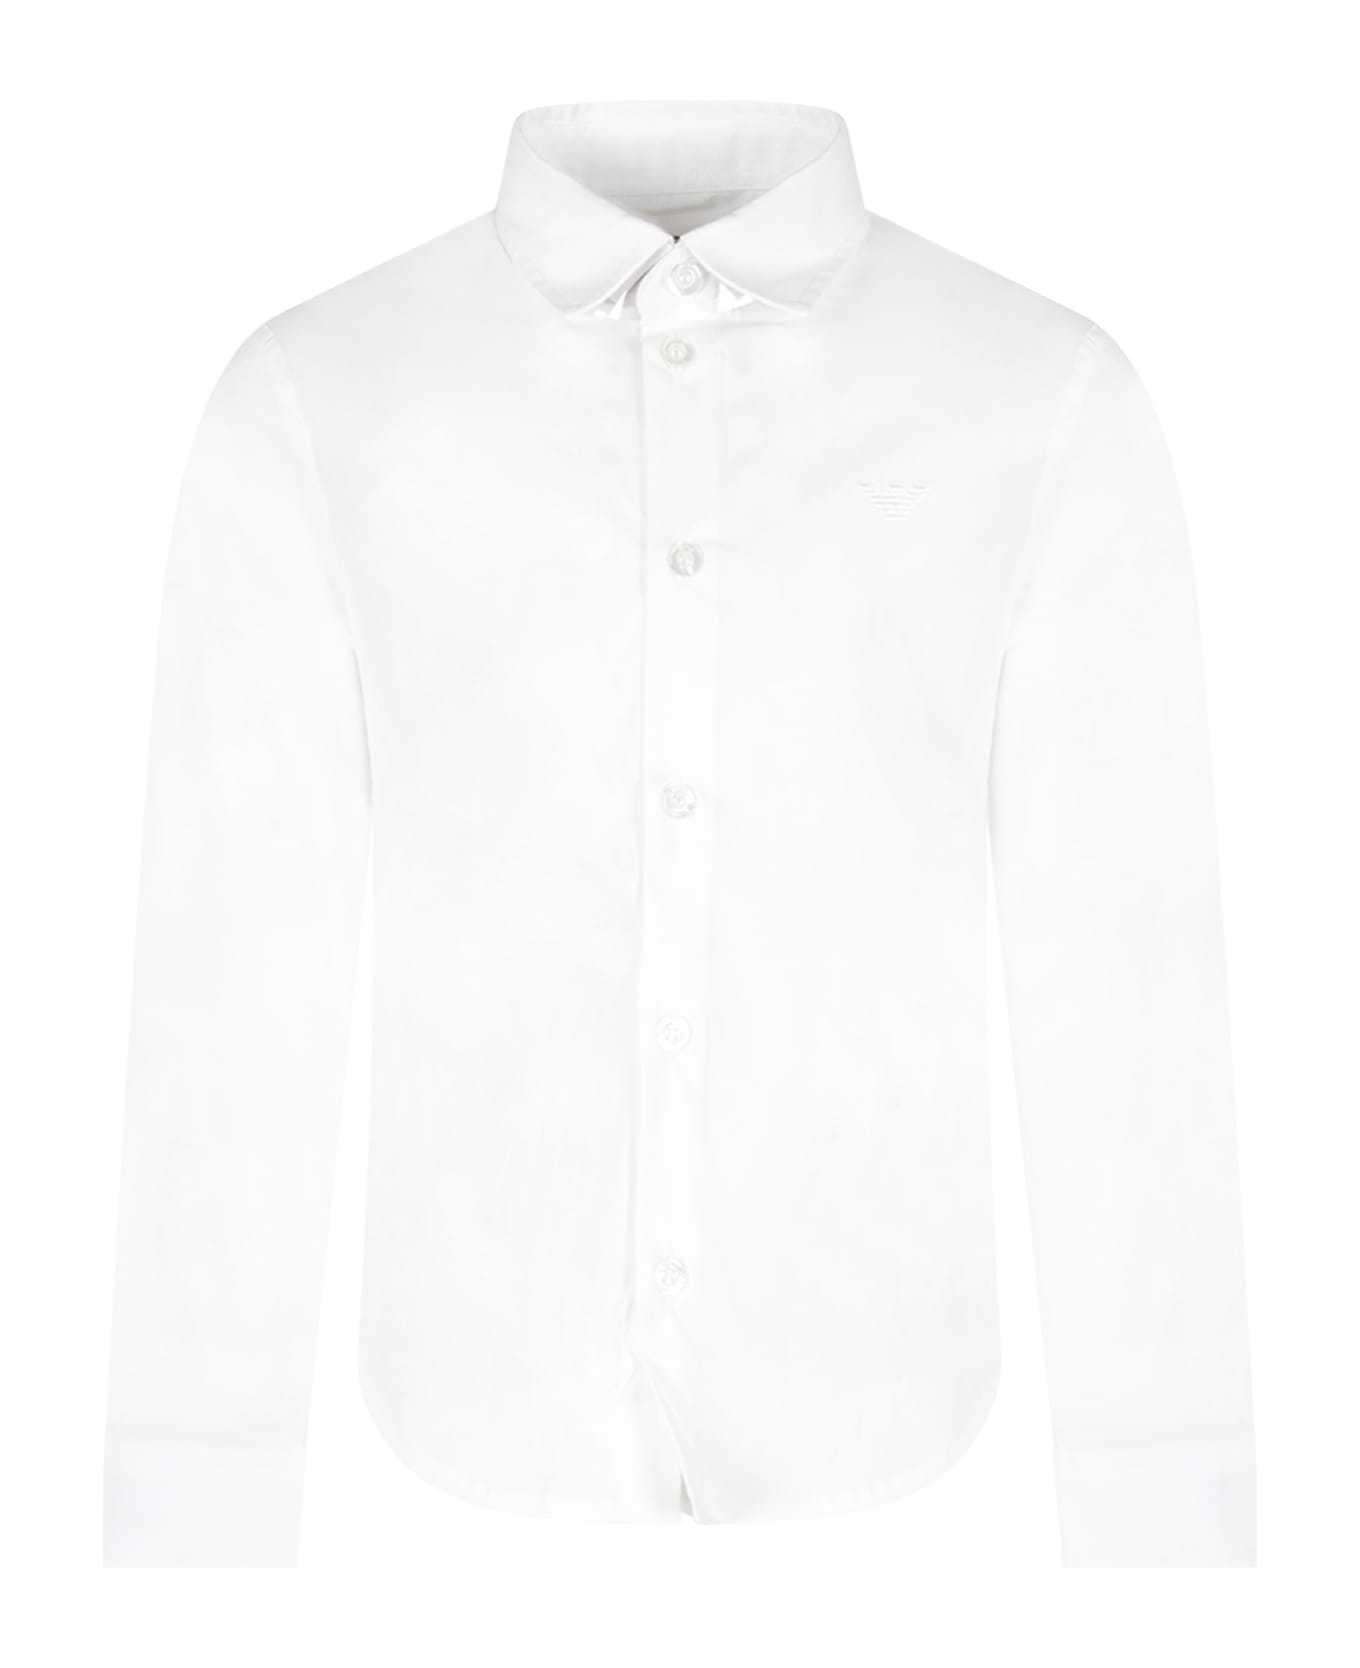 Armani Collezioni White Shirt For Boy With Iconic Eagle - White